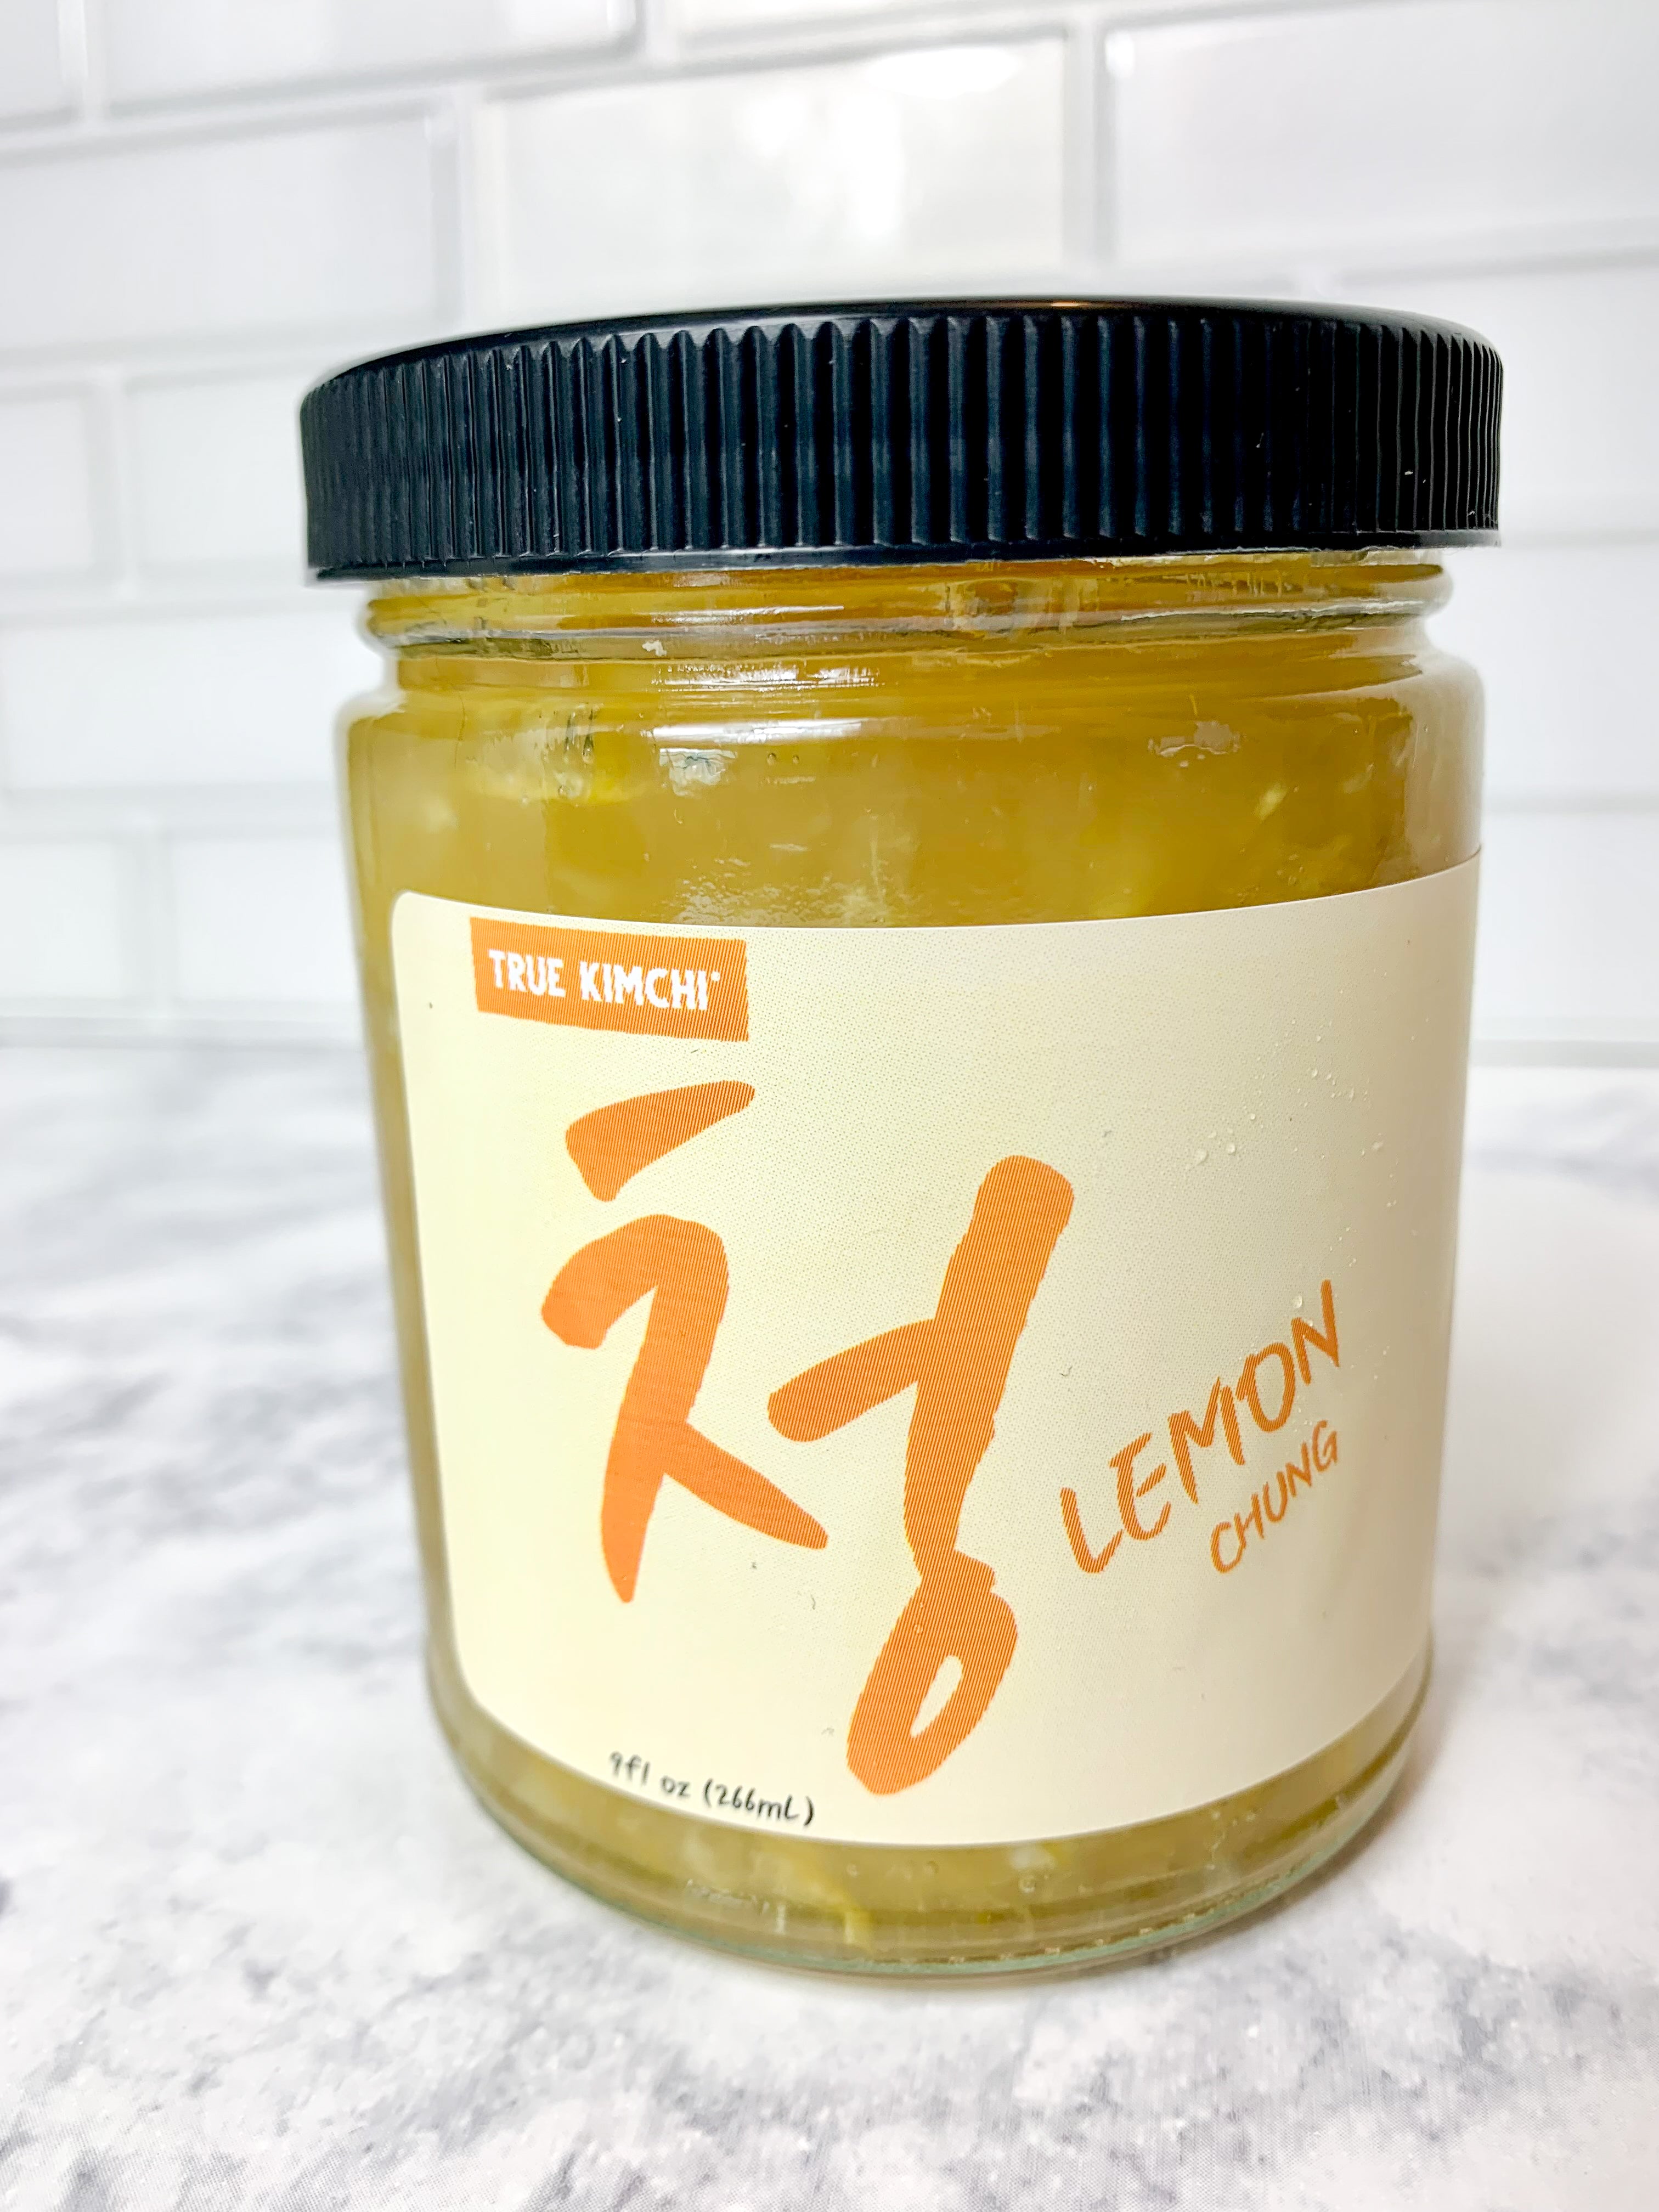 Lemon Chung (Lemon Preserve)